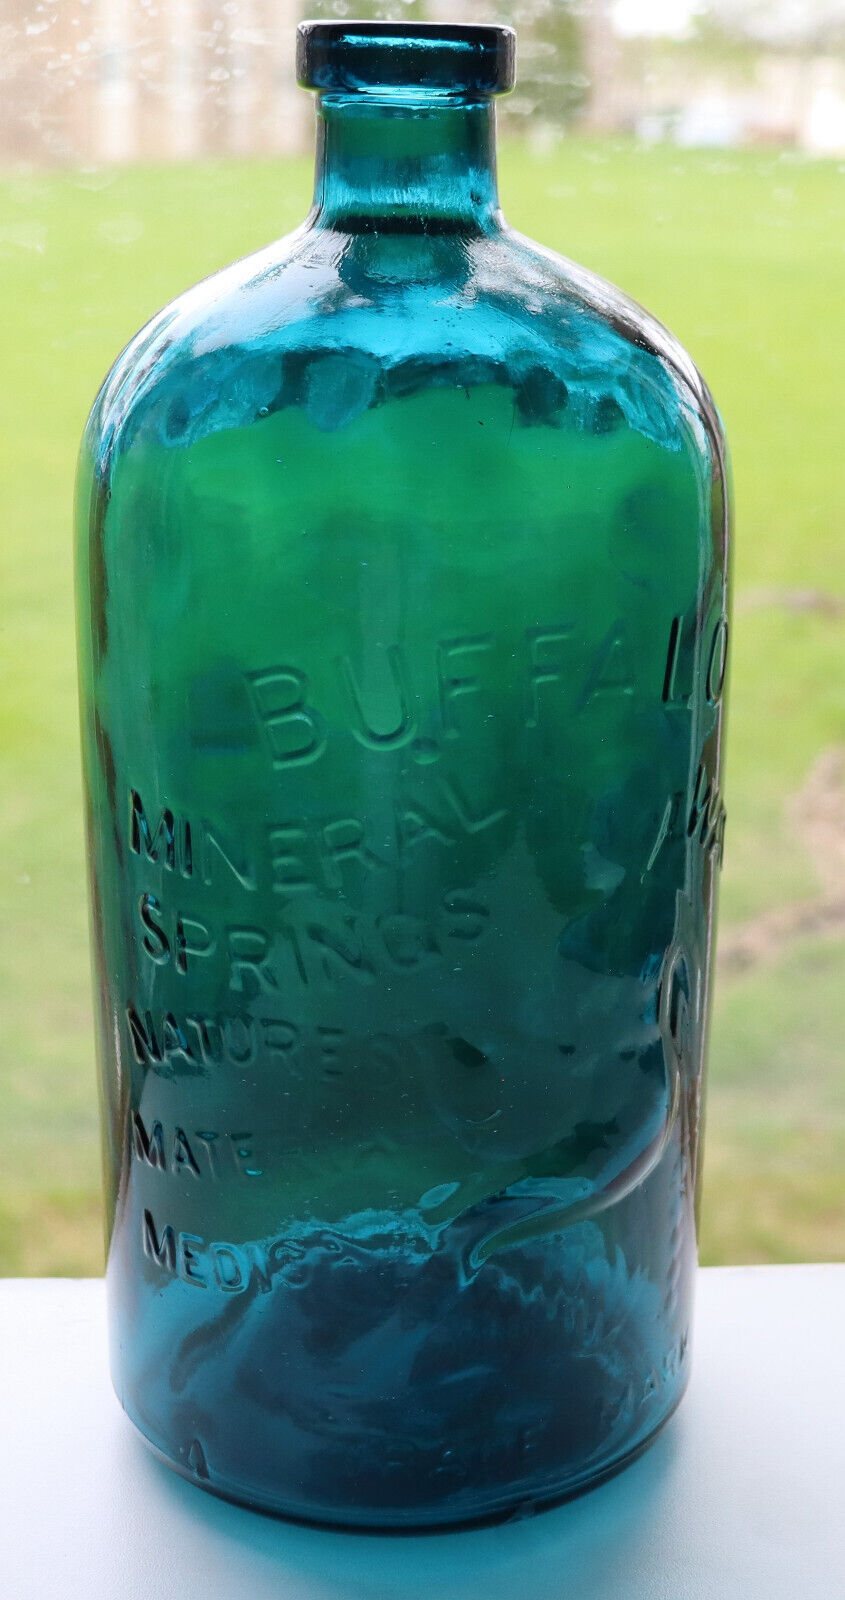 RARE Deep Blue Buffallo Mineral Water Springs Natures Materia Medica Bottle